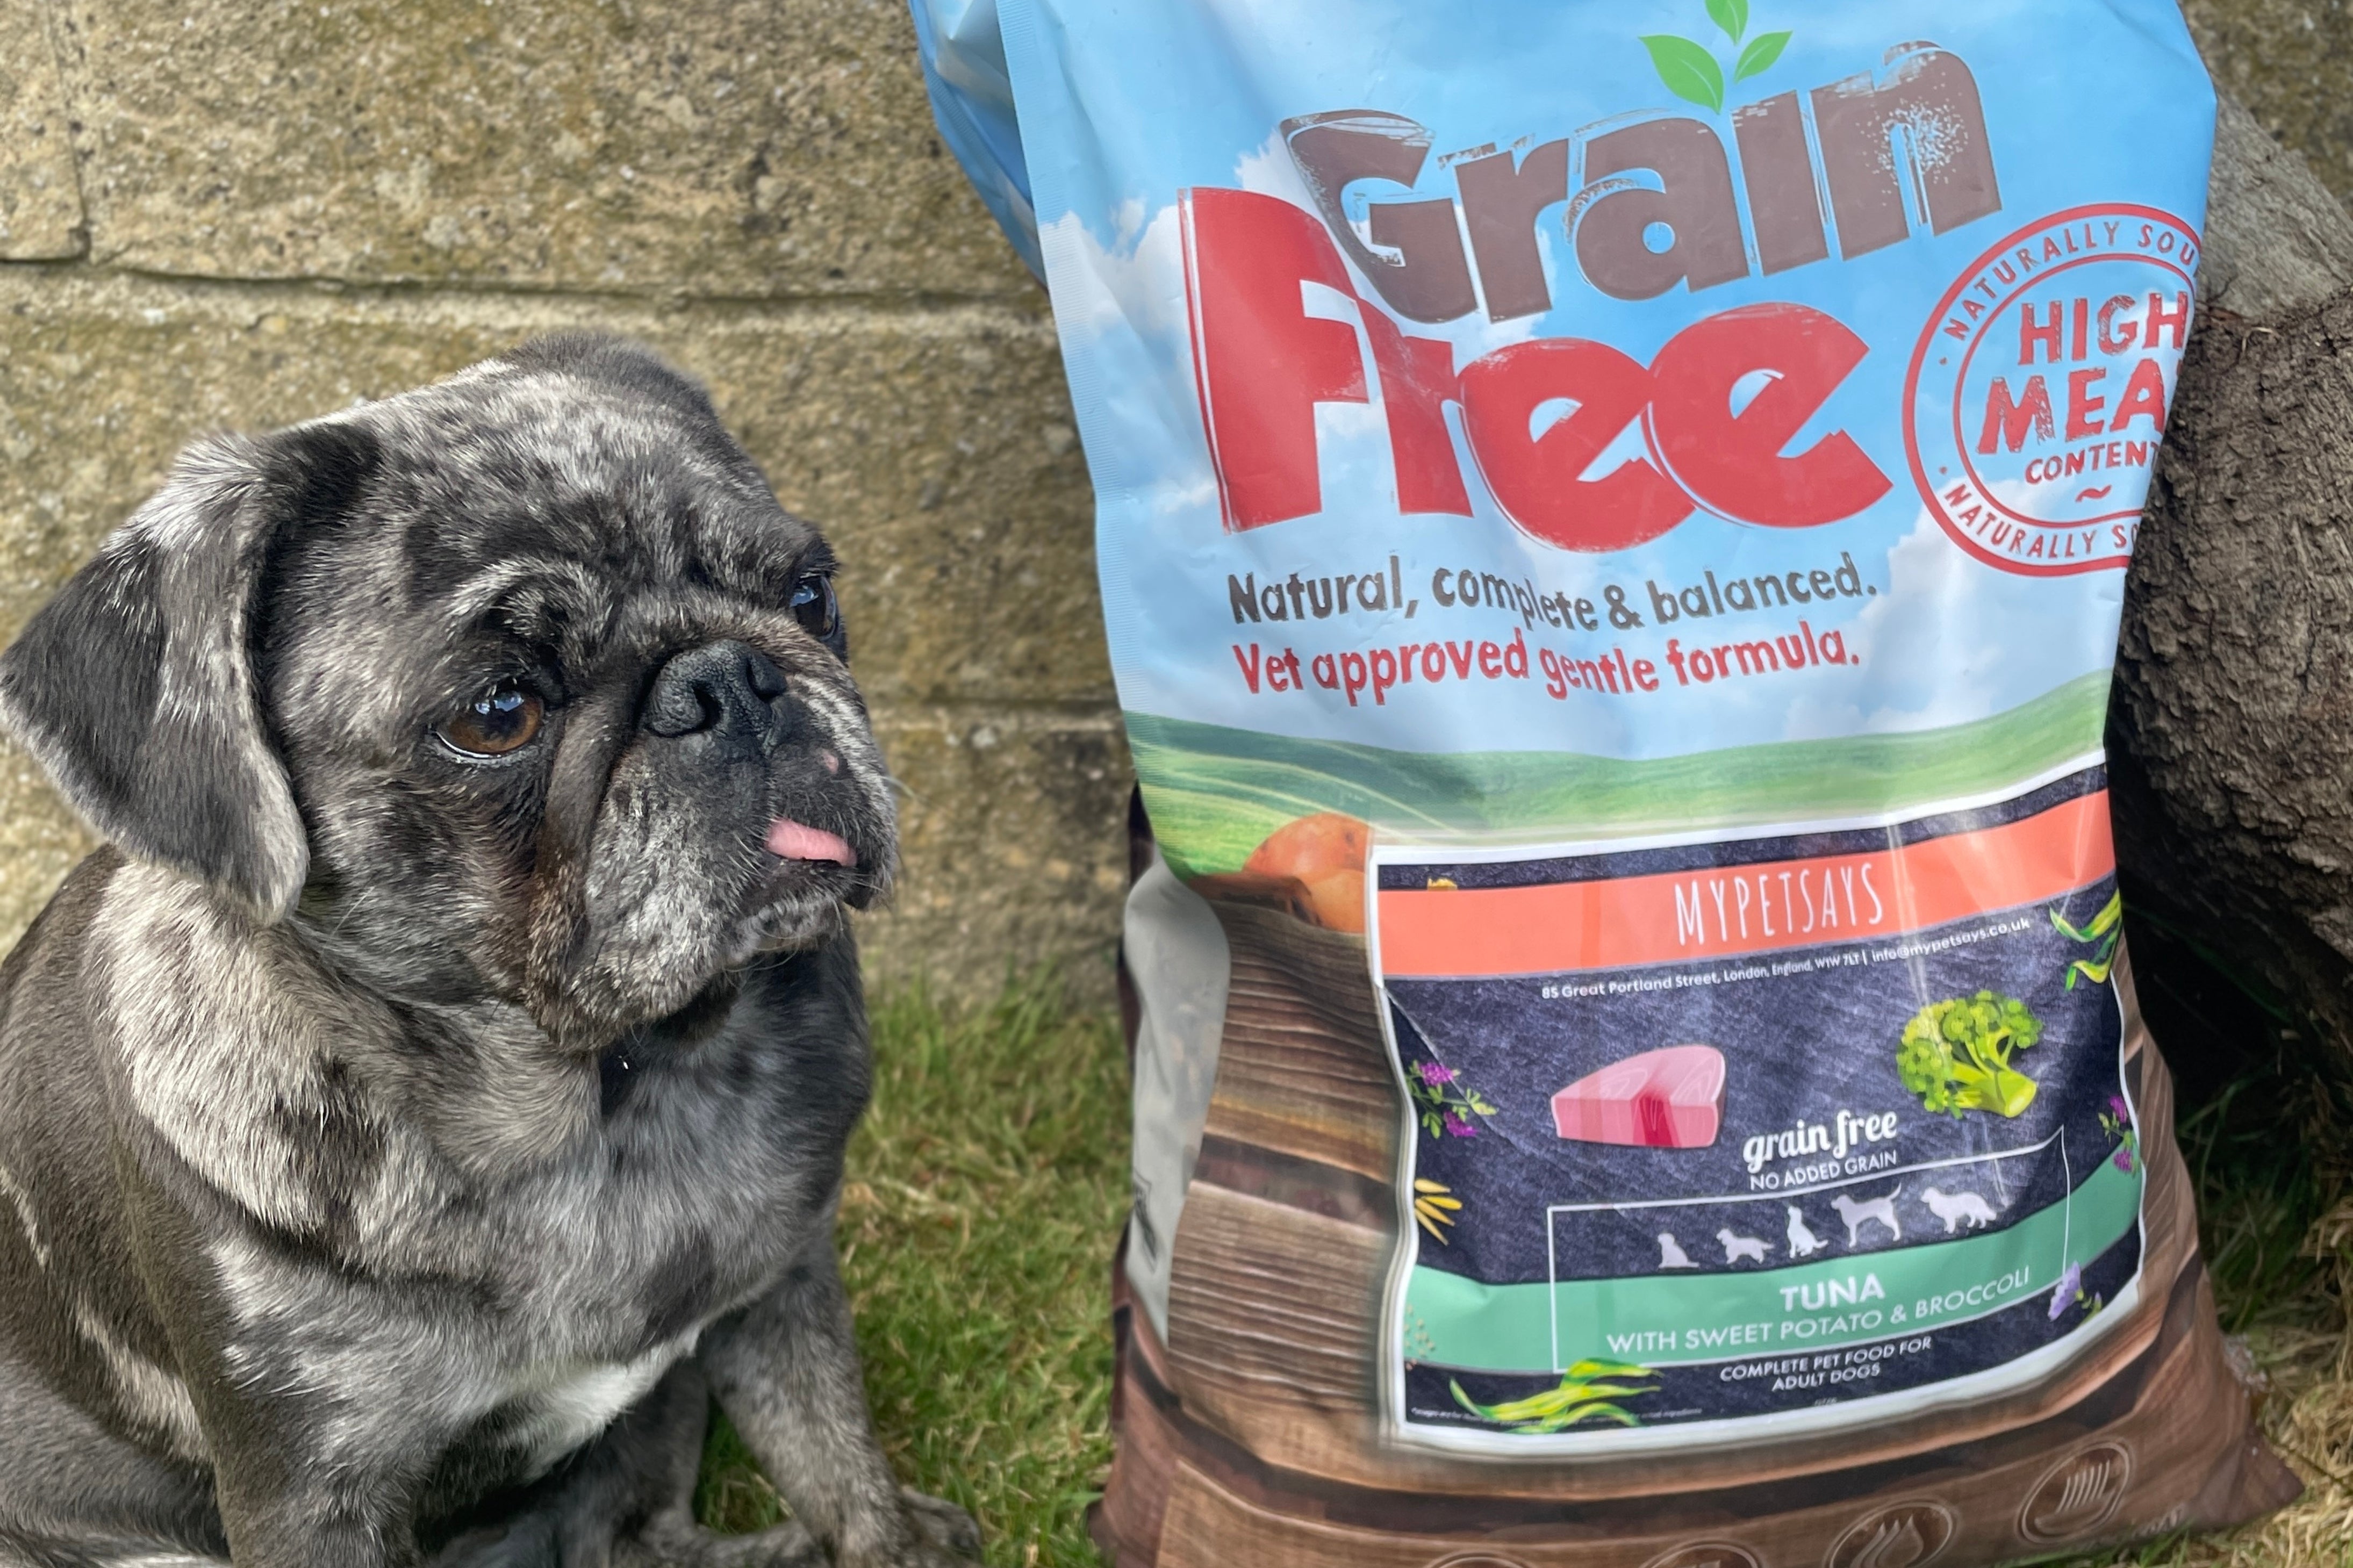 Grain Free Dog Food - Tuna with Salmon, Sweet Potato & Broccoli that contains omega-3 fatty acids 